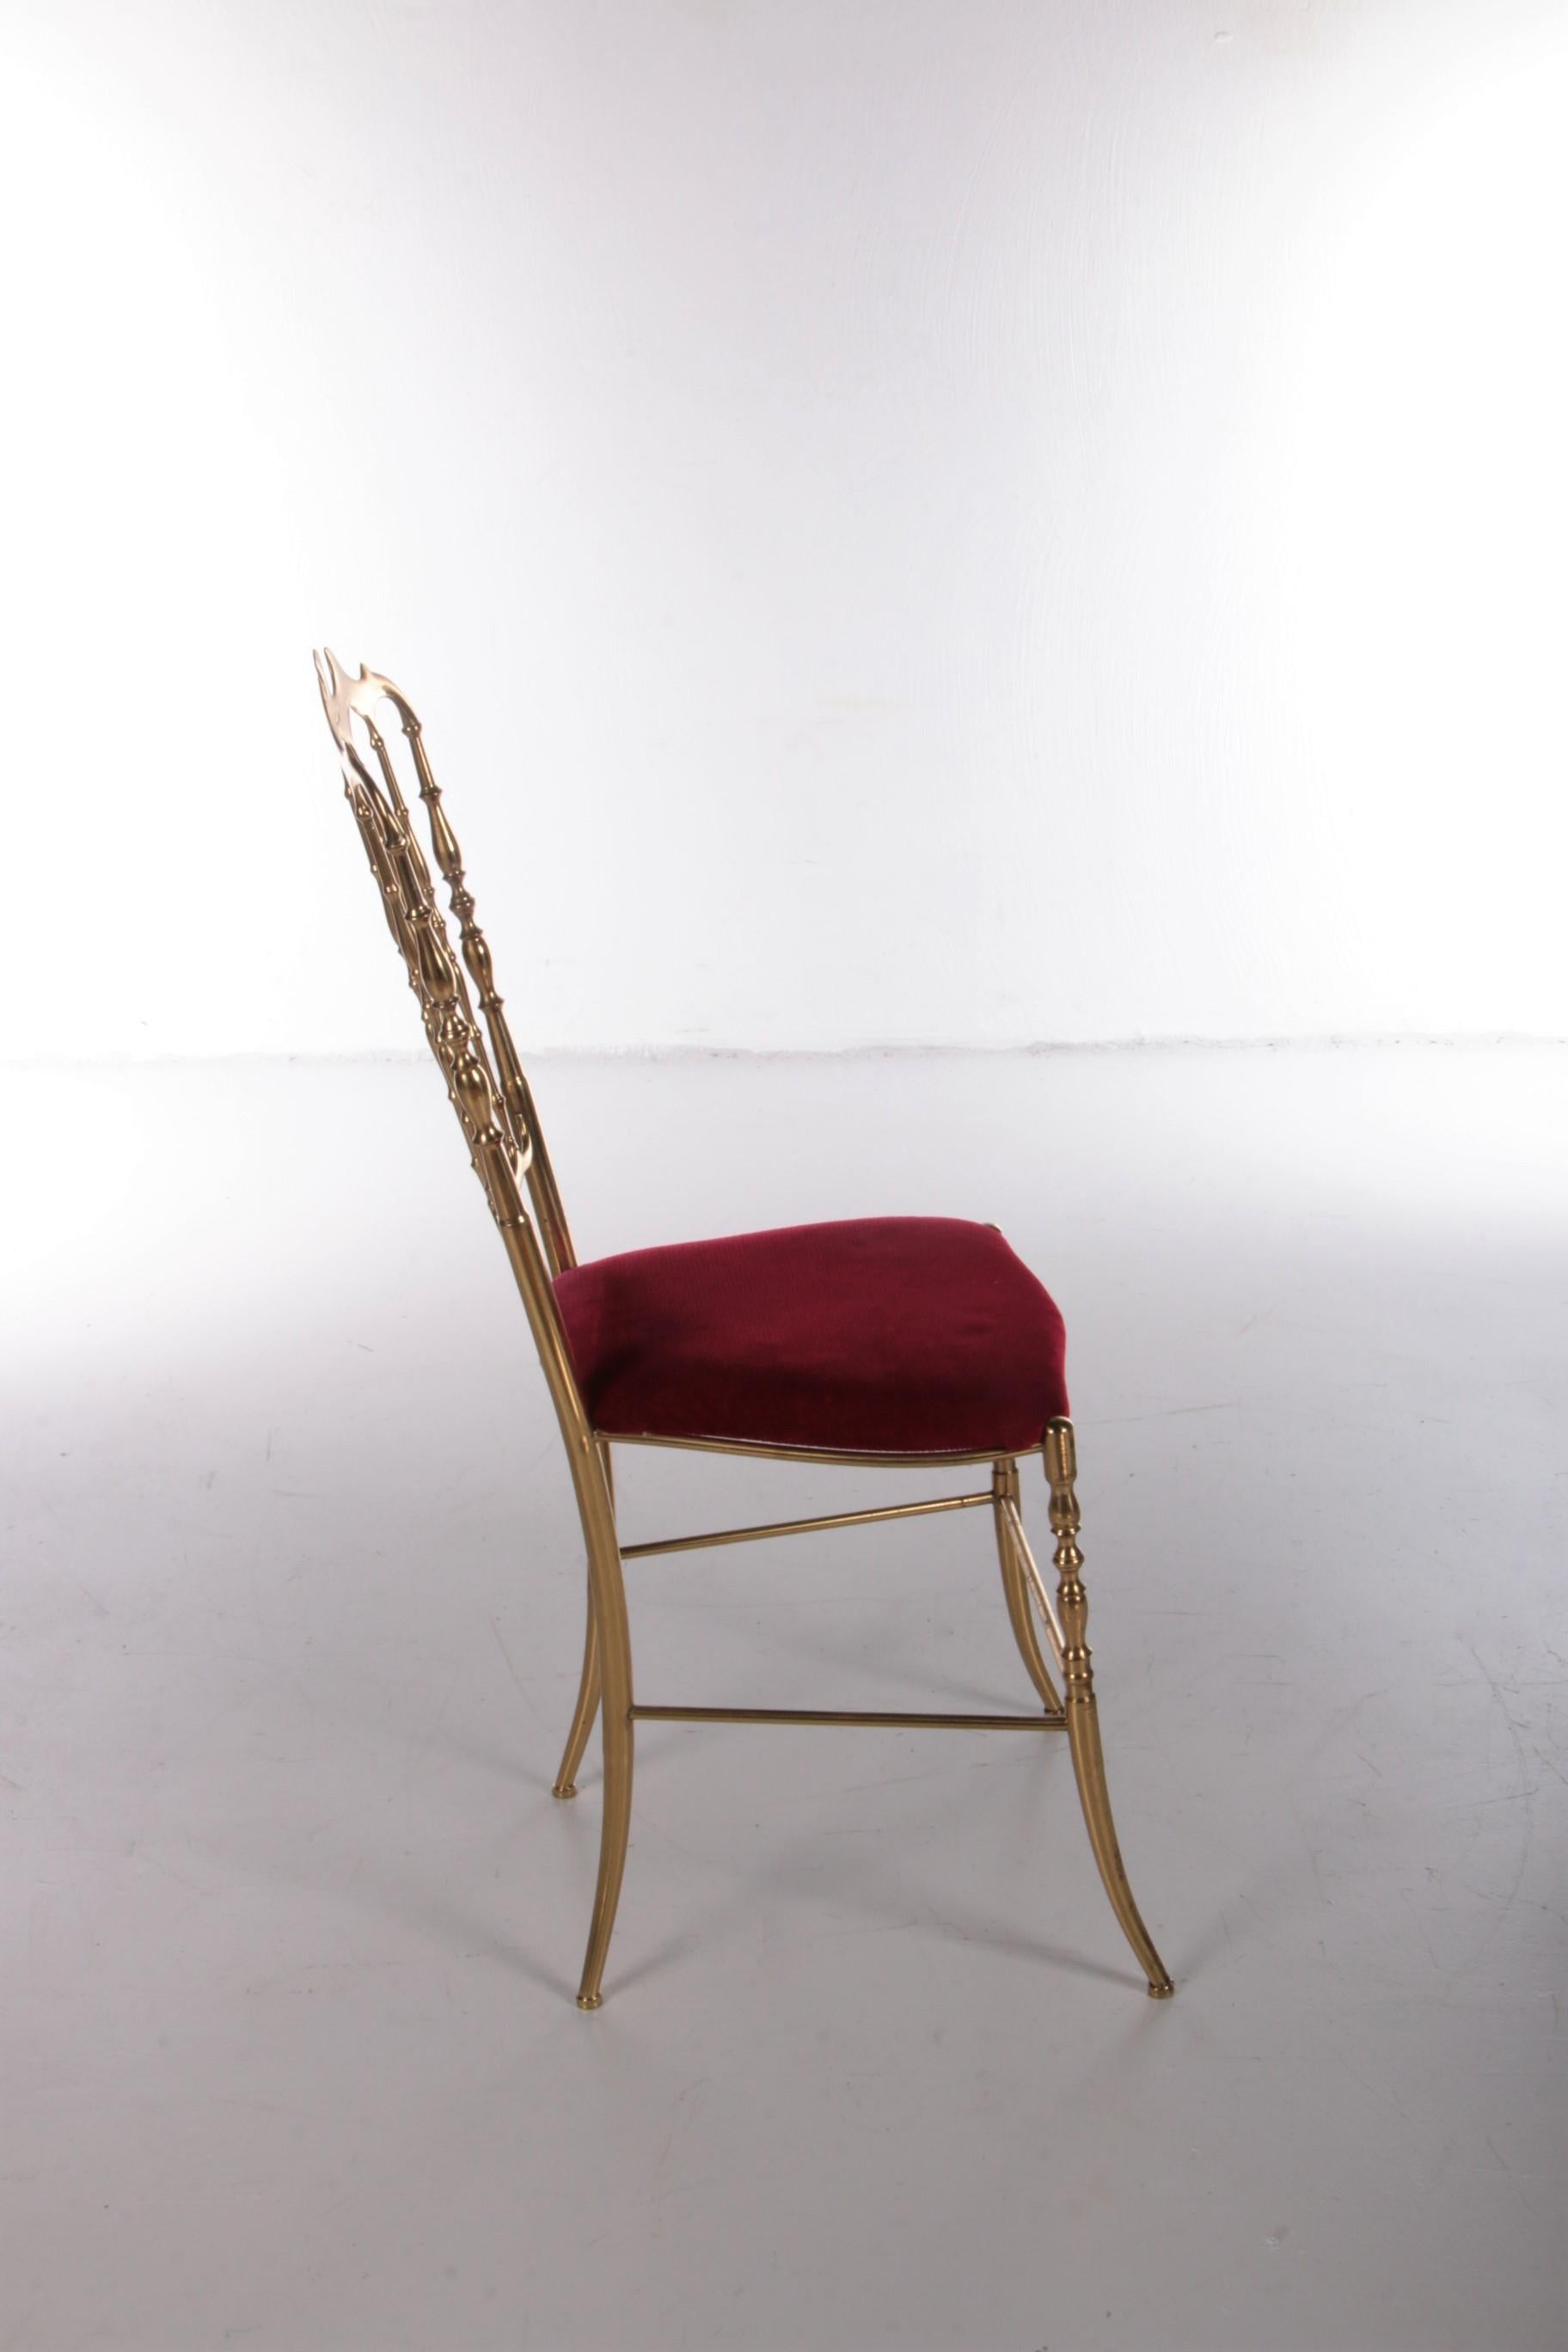 Brass Italian Design Side Chair by Giuseppe Gaetano Descalzi for Chiavari, Italy 1950 For Sale